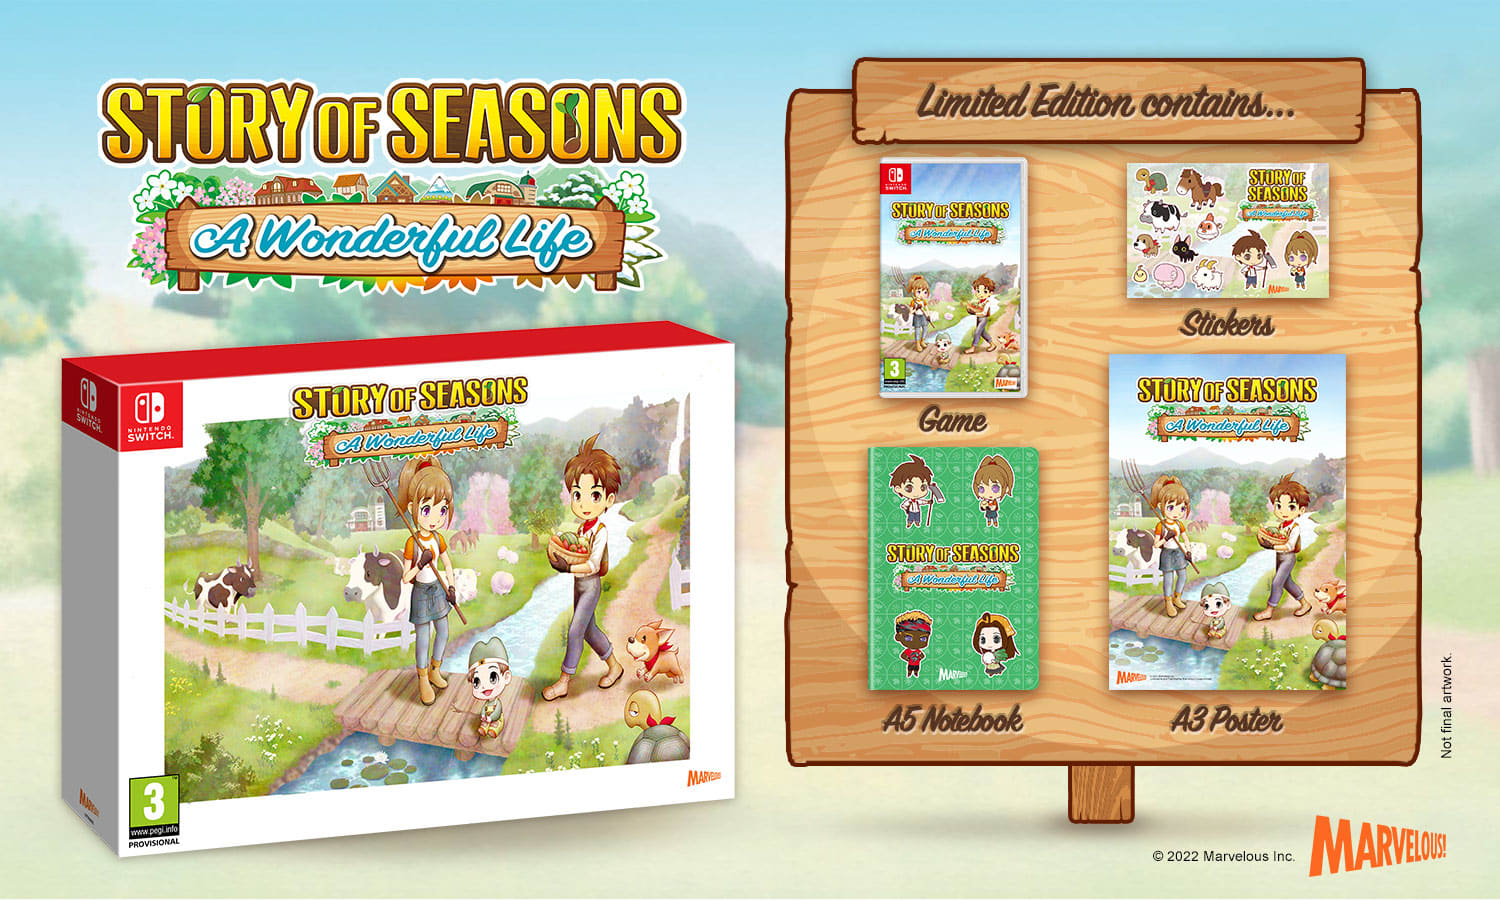 - Switch Seasons Sklep A Edition Limited Nintendo Wonderful Story of Life